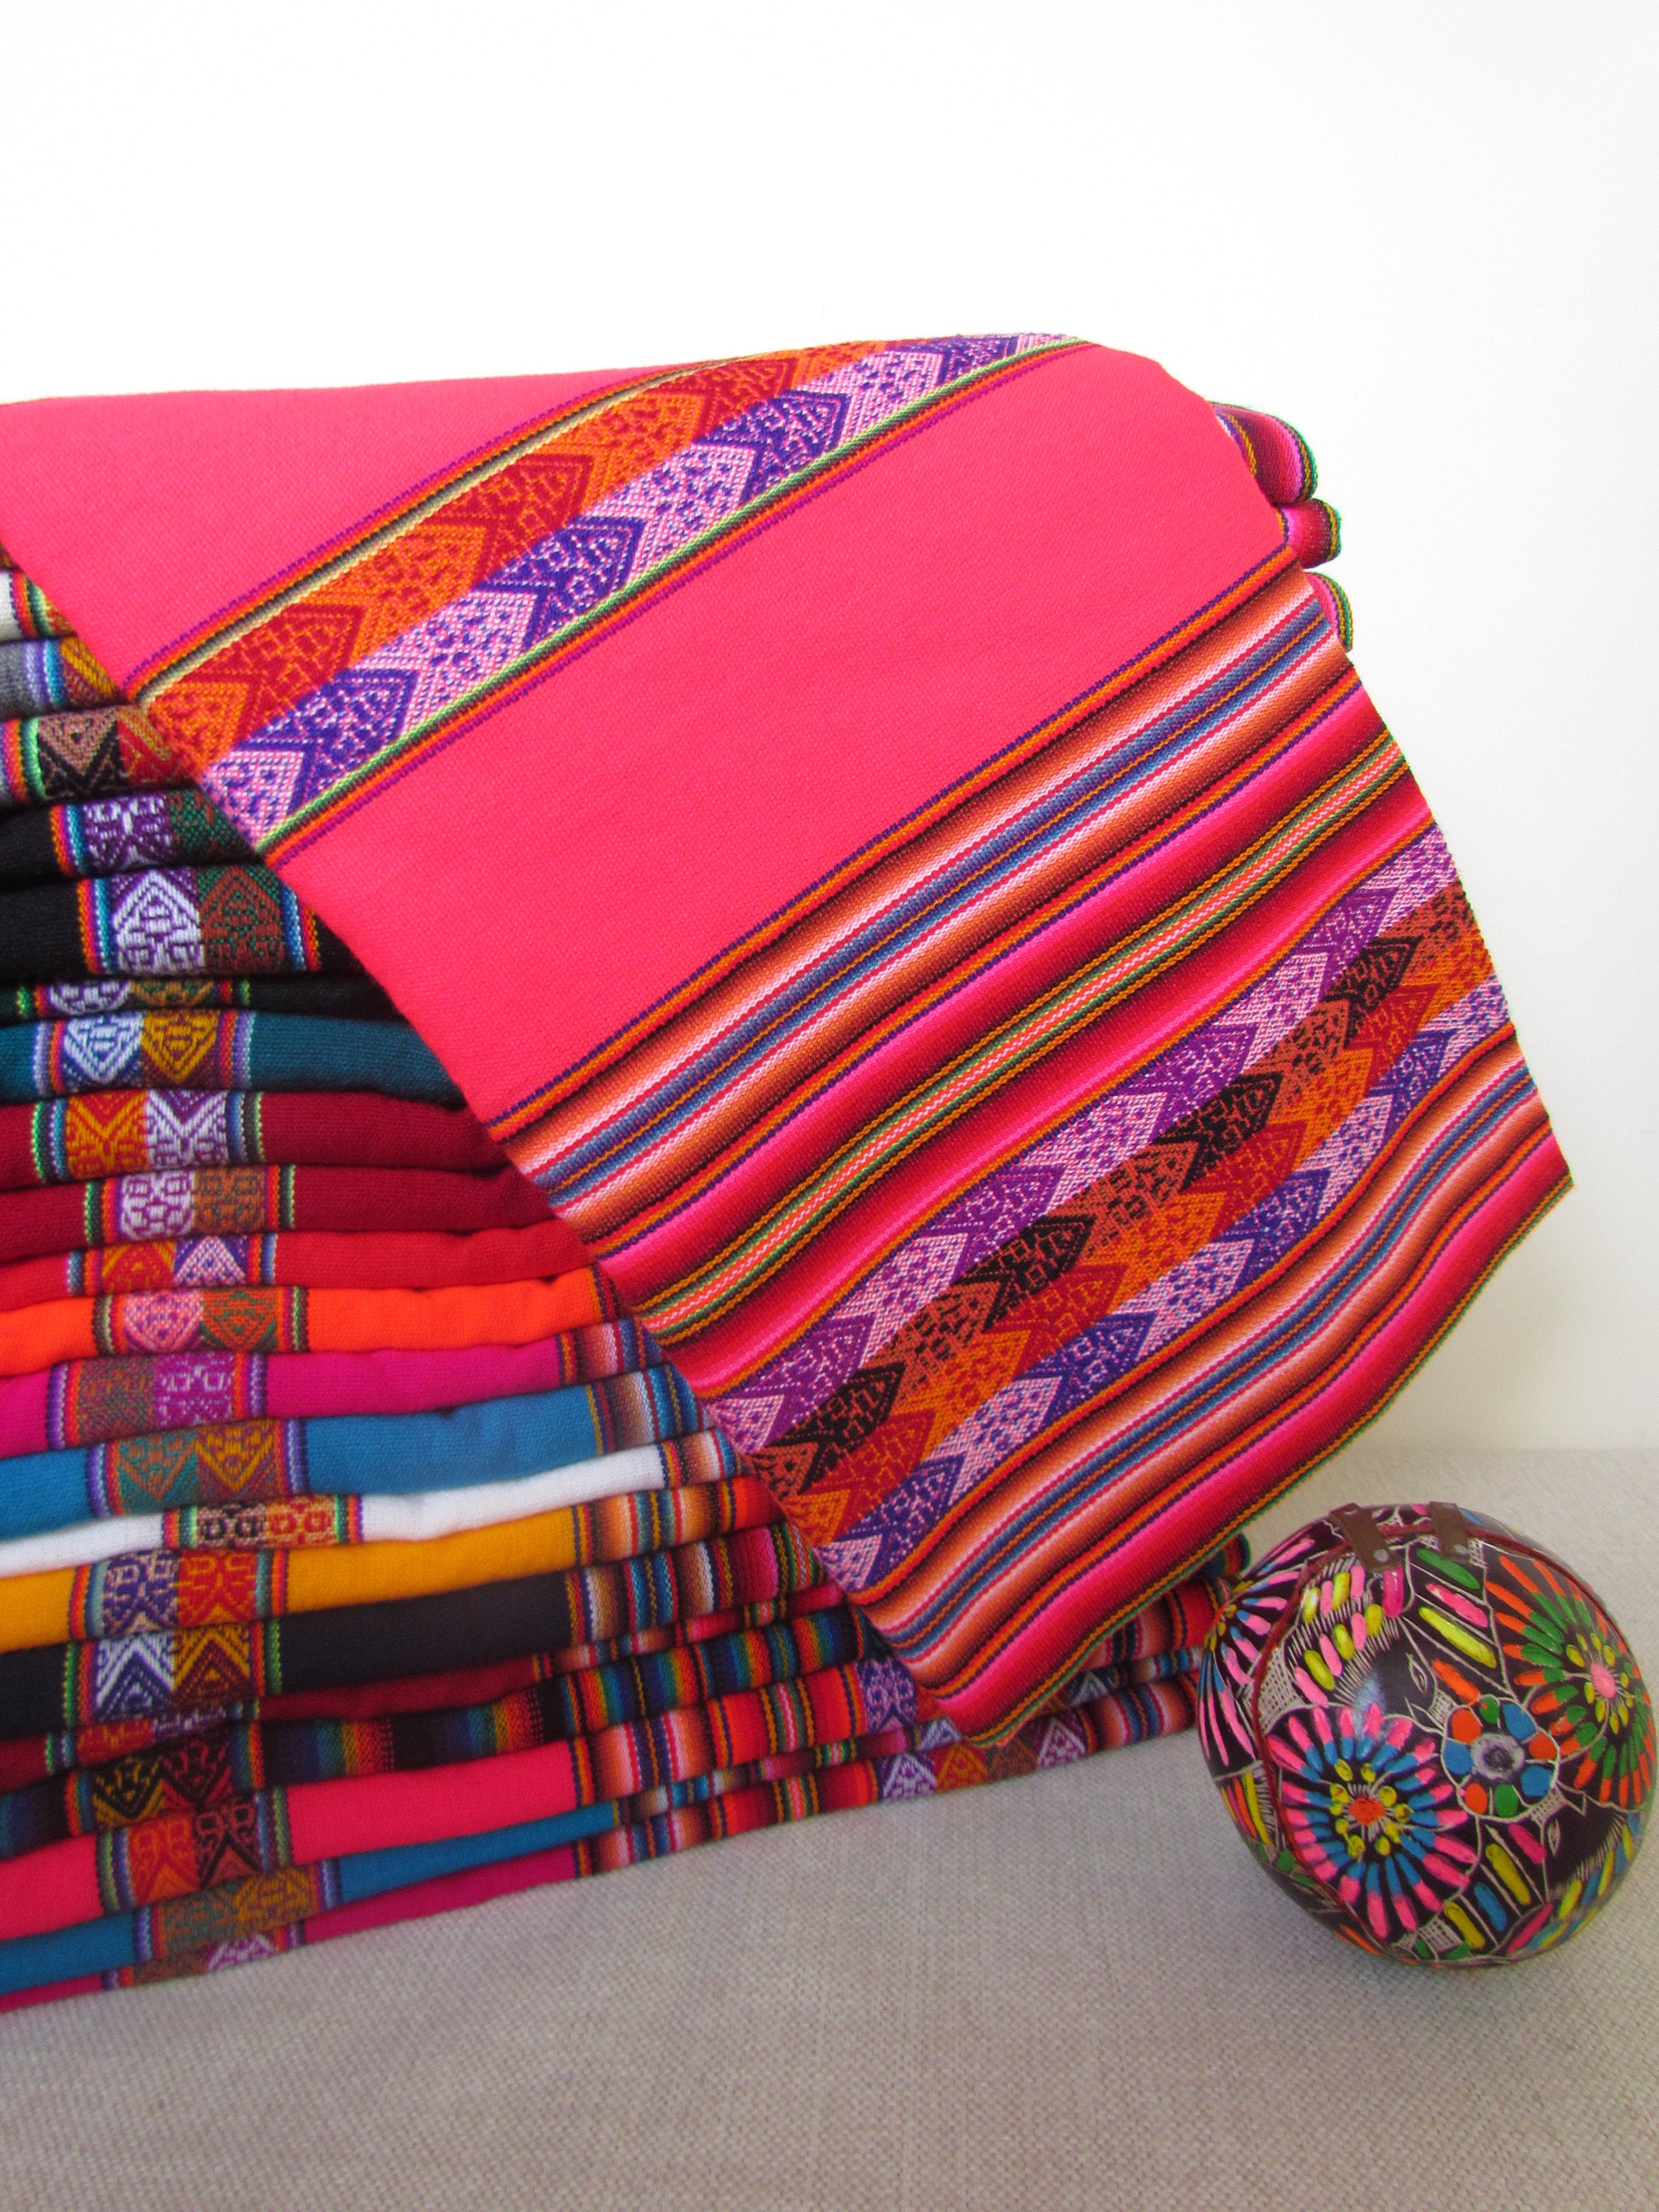 Peruvian Manta 48x42/Bohemian fabric/Peru Textile | Etsy